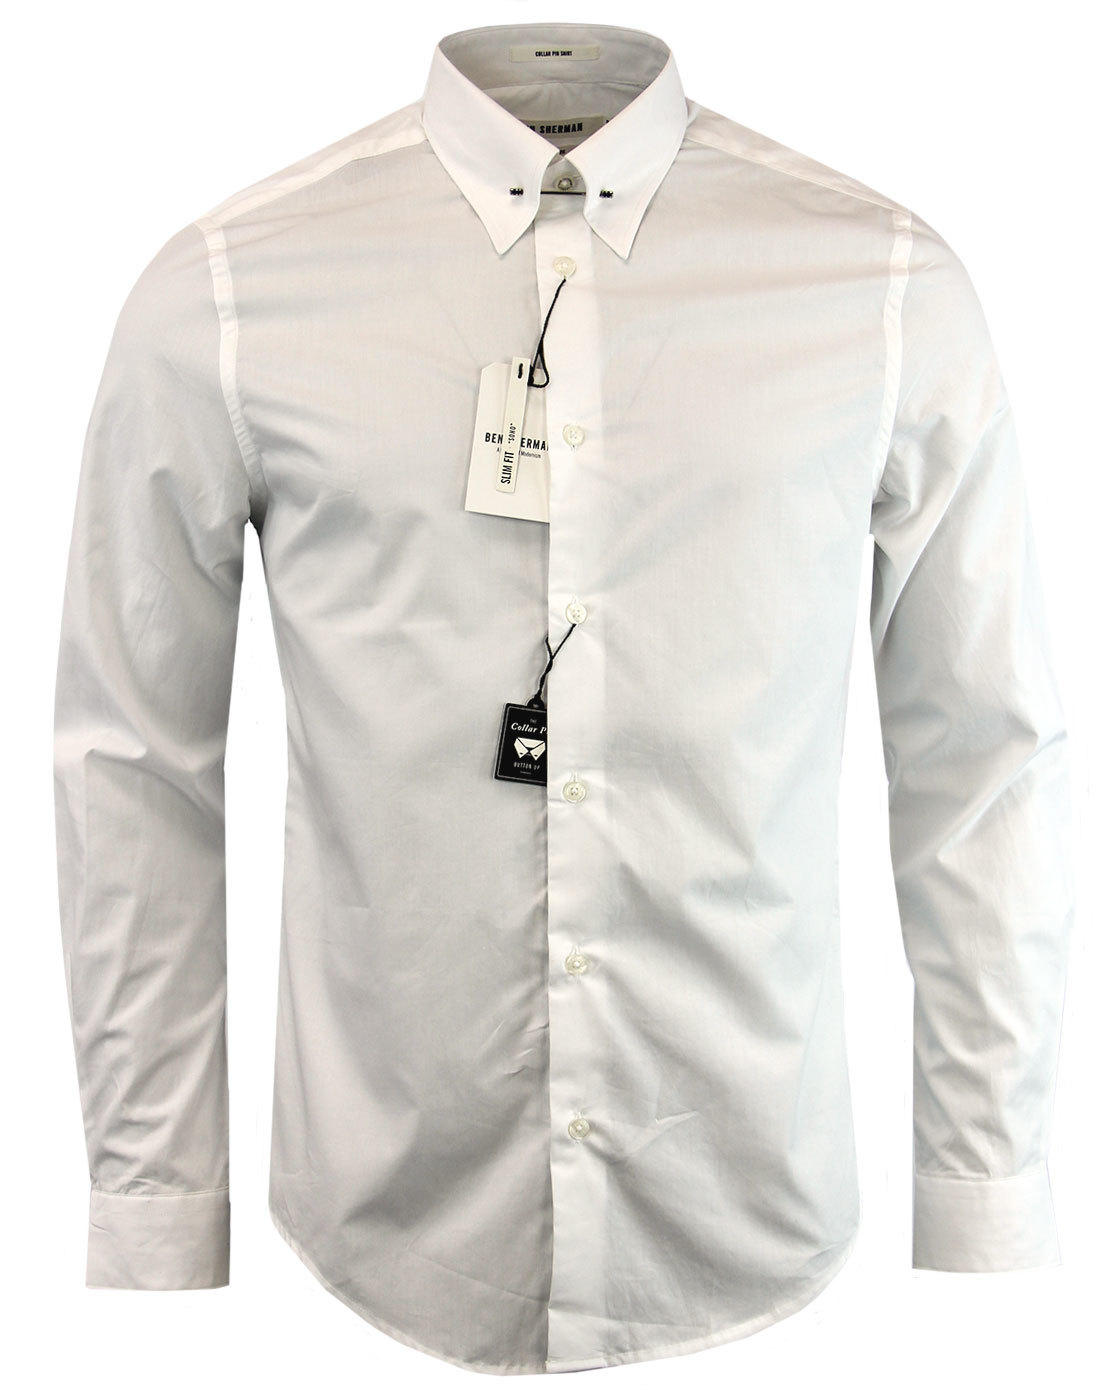 BEN SHERMAN Retro 1960s Mod Pin Collar Shirt WHITE